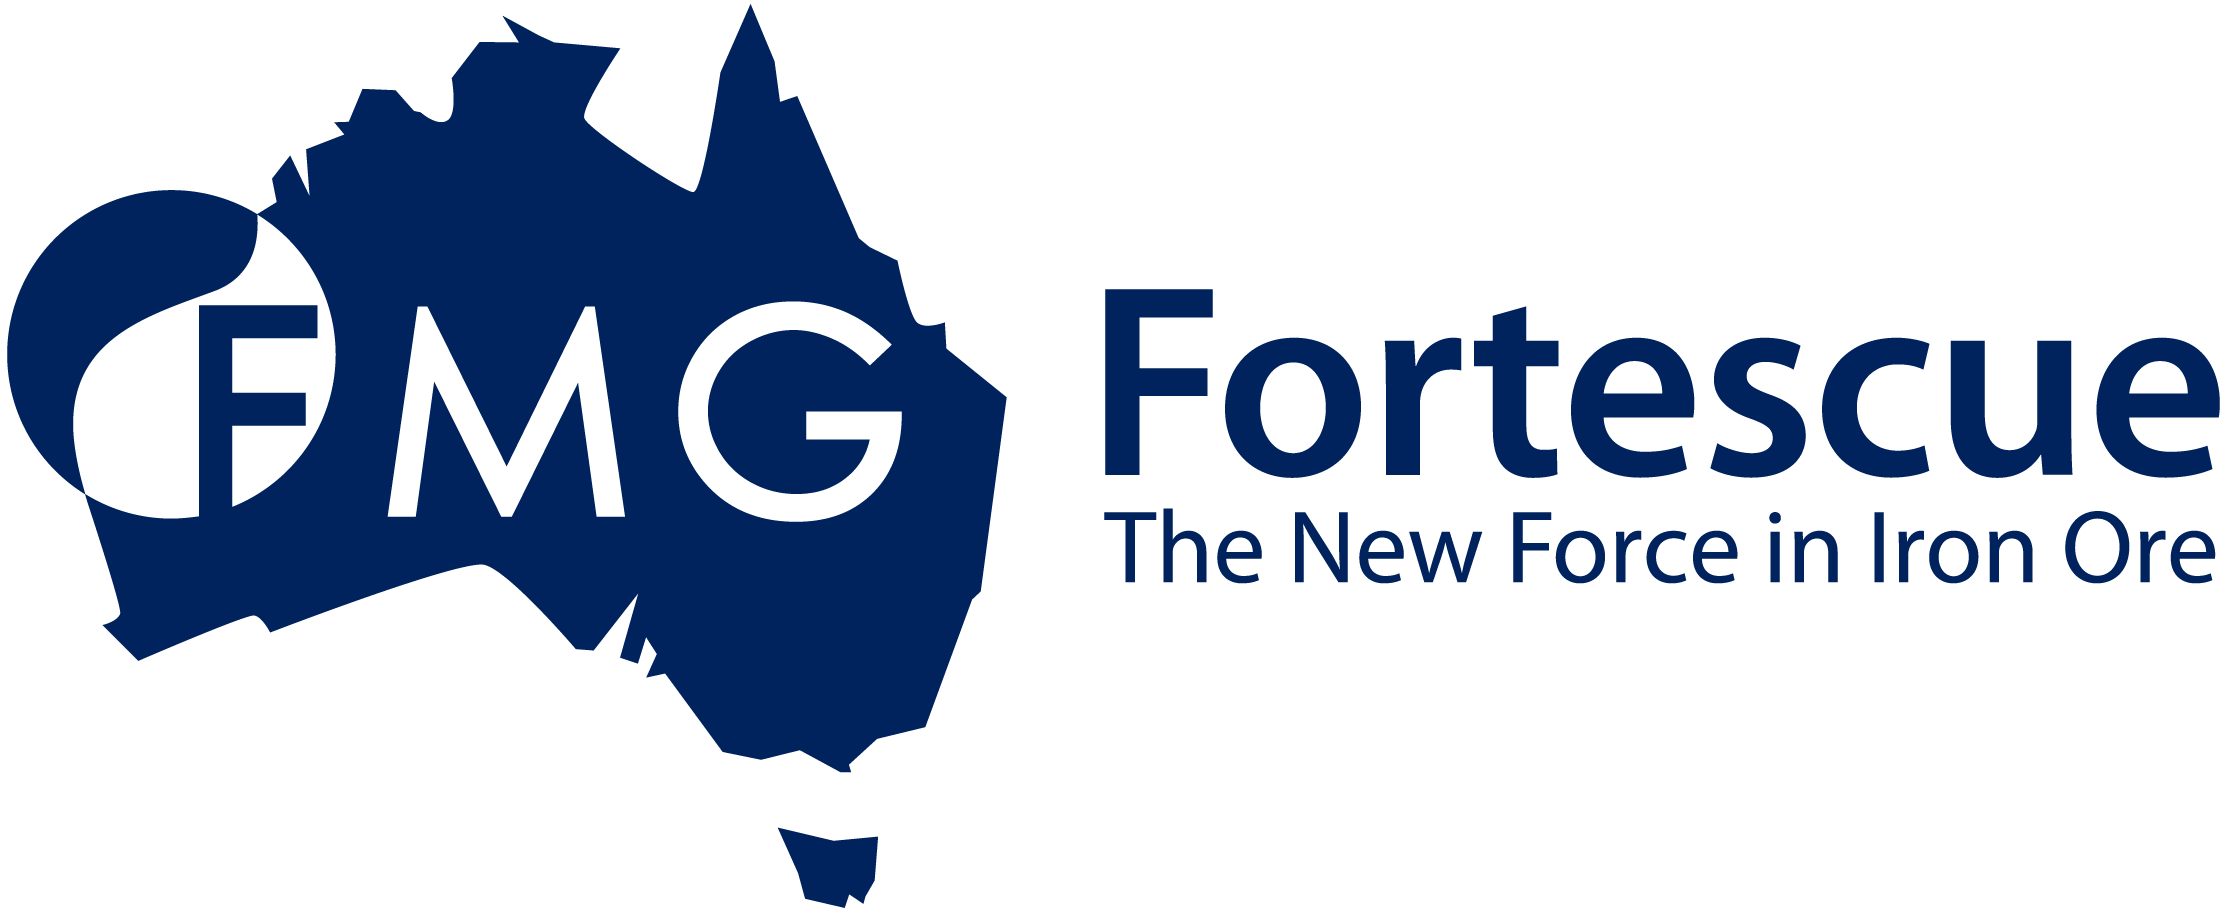 FMG Logo photo - 1